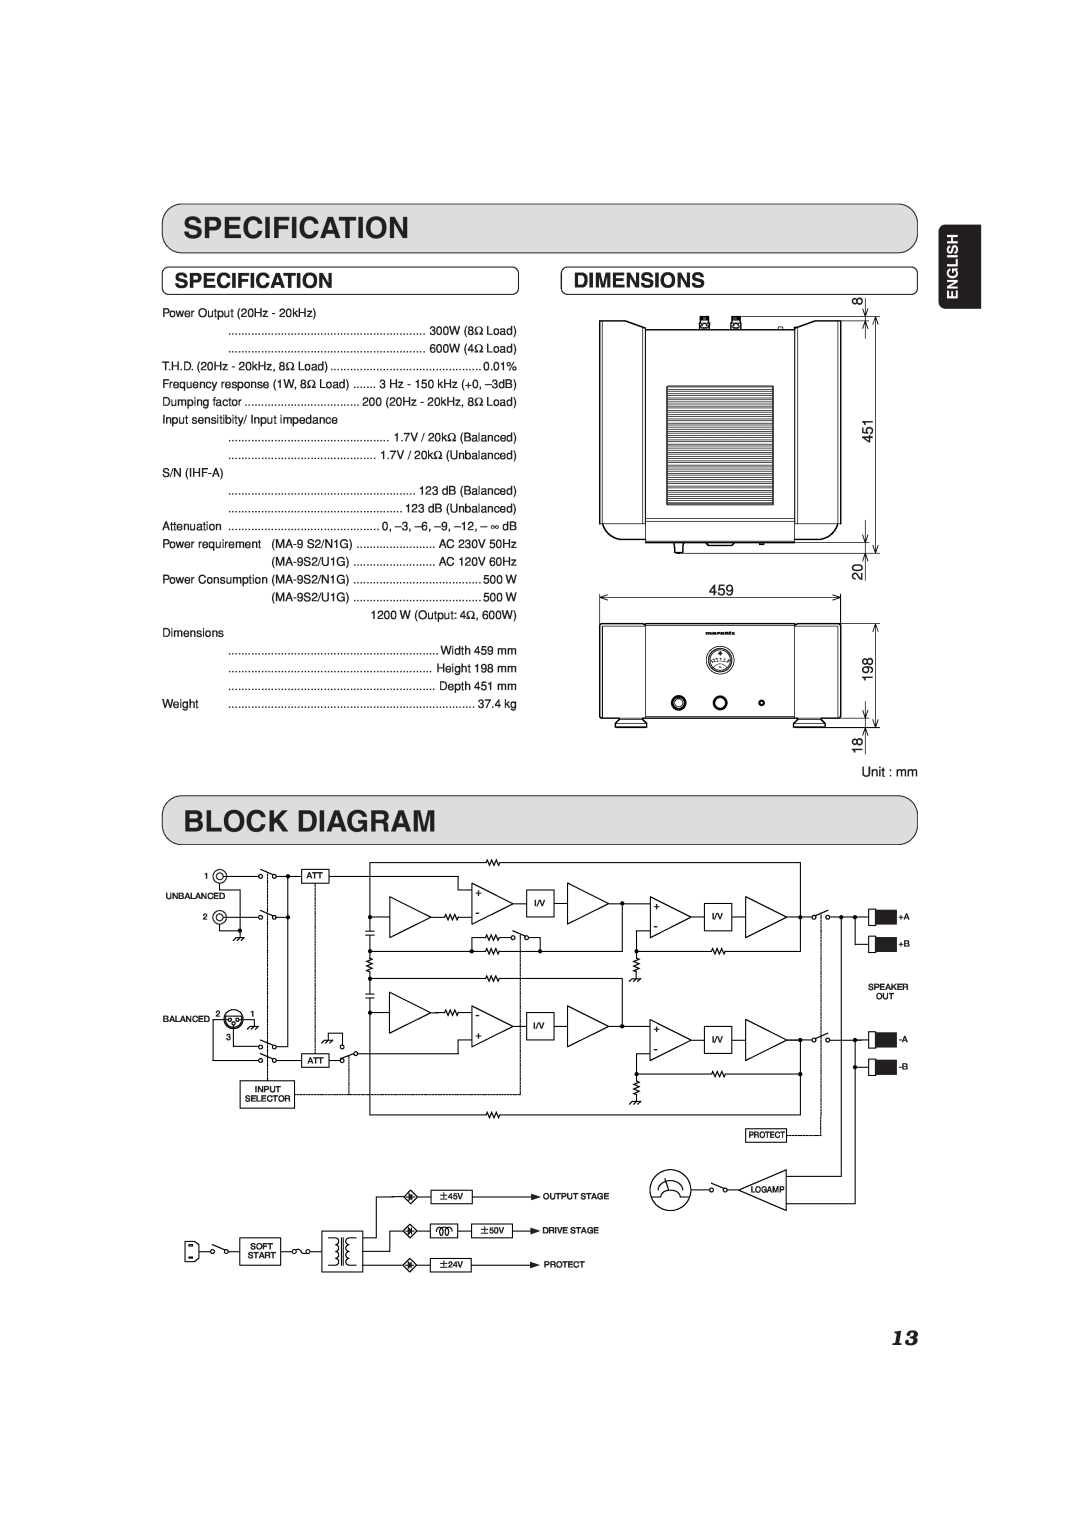 Marantz MA-9S2 manual Specification, Block Diagram, Dimensions, English 